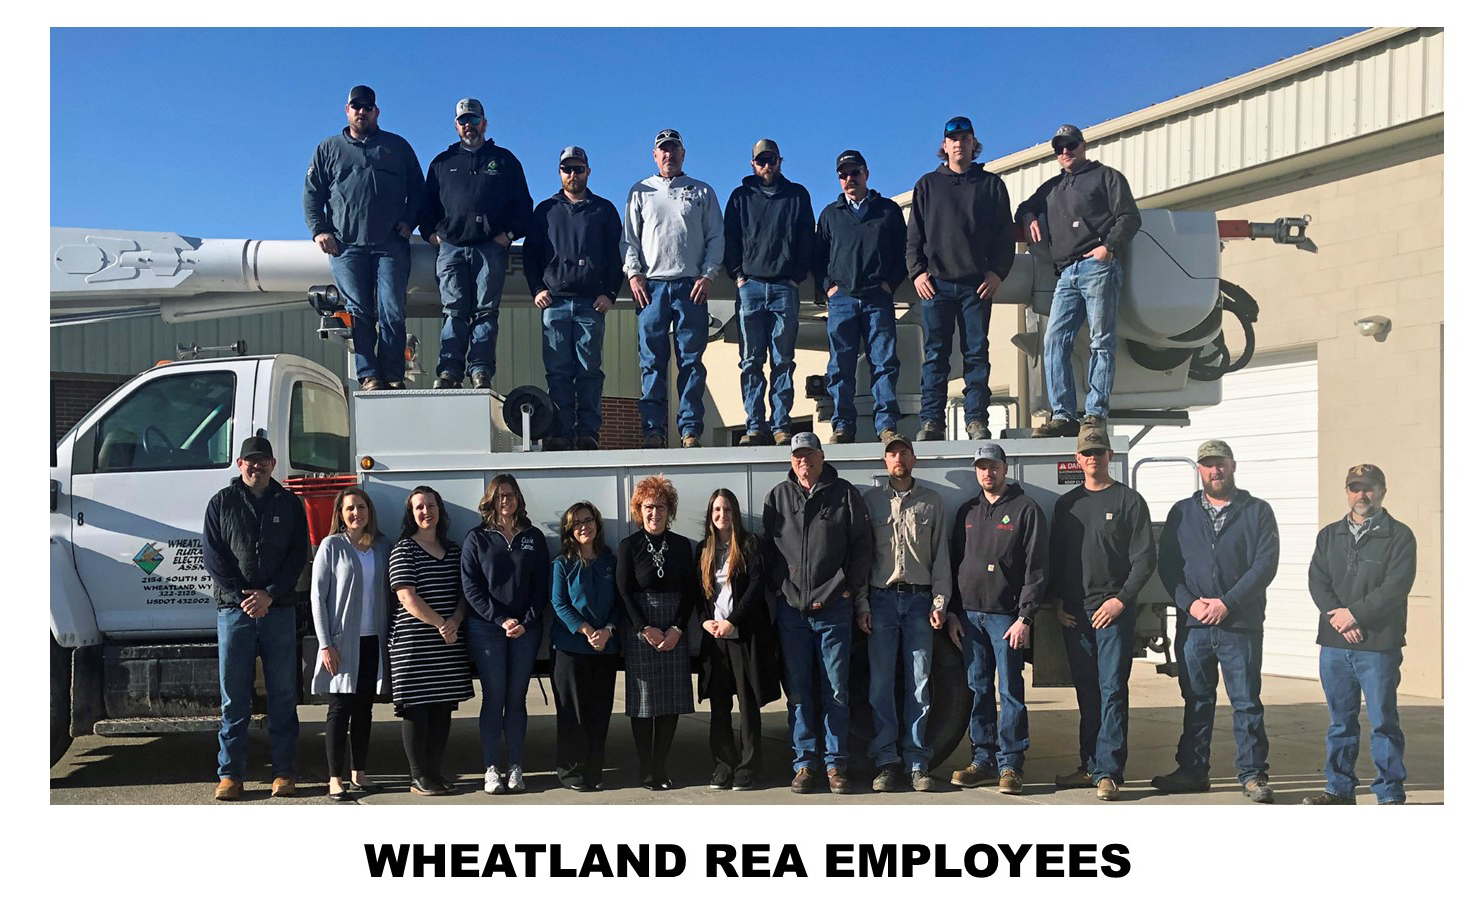 Wheatland REA employees